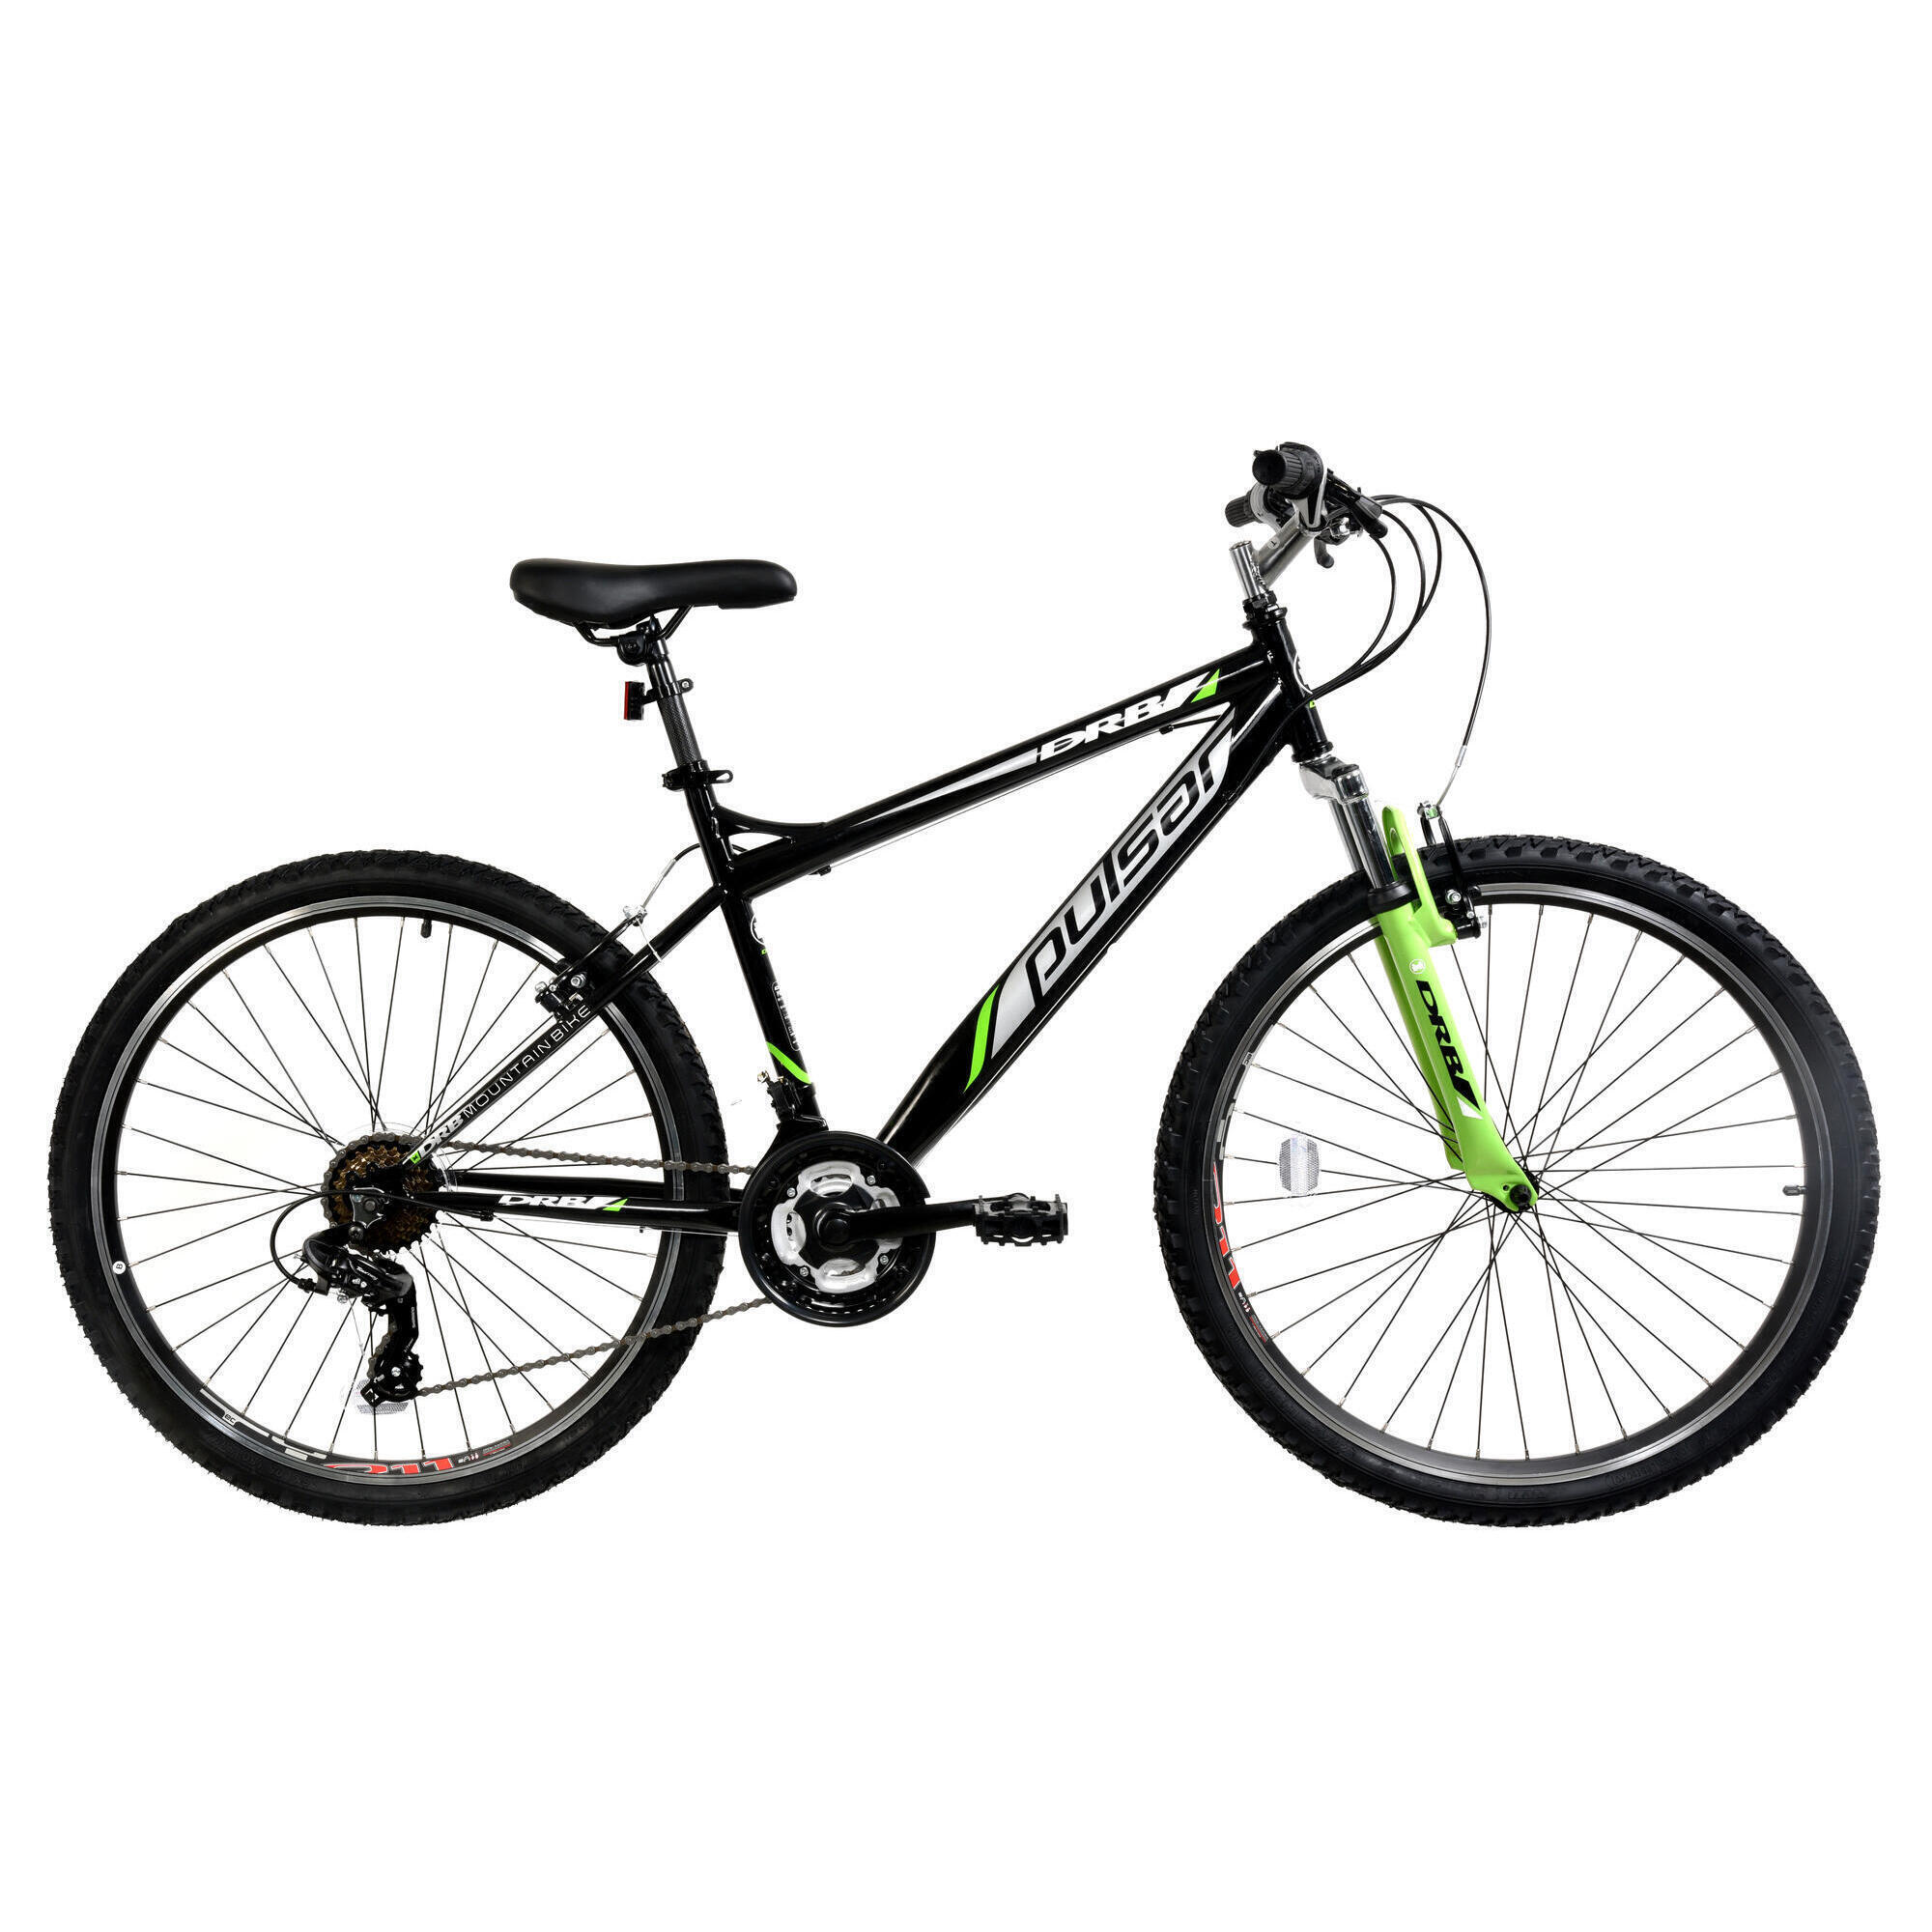 DALLINGRIDGE Dallingridge Pulsar Adult's Hardtail Mountain Bike, 26In Wheel - Black/Green